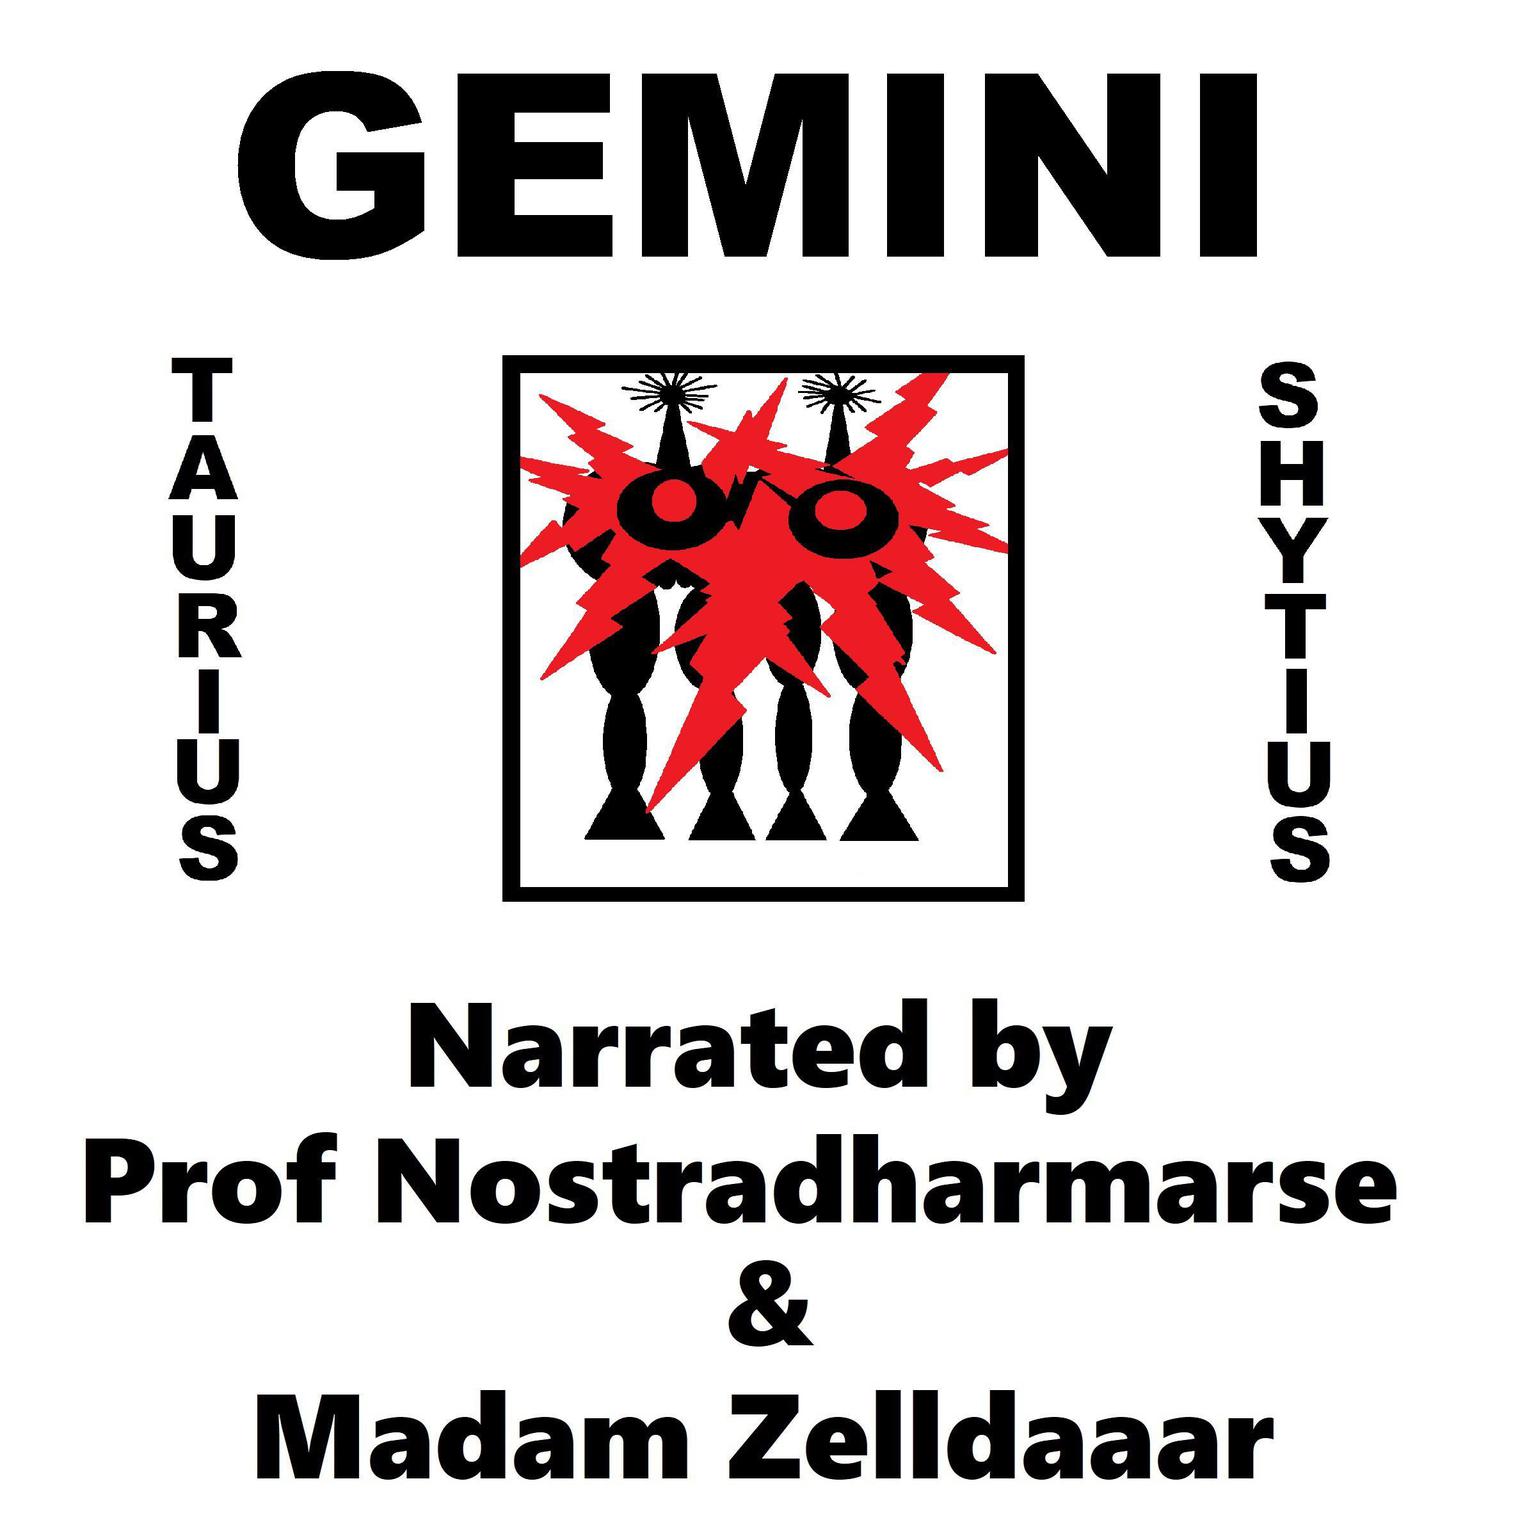 Gemini Audiobook, by Taurius Shytius